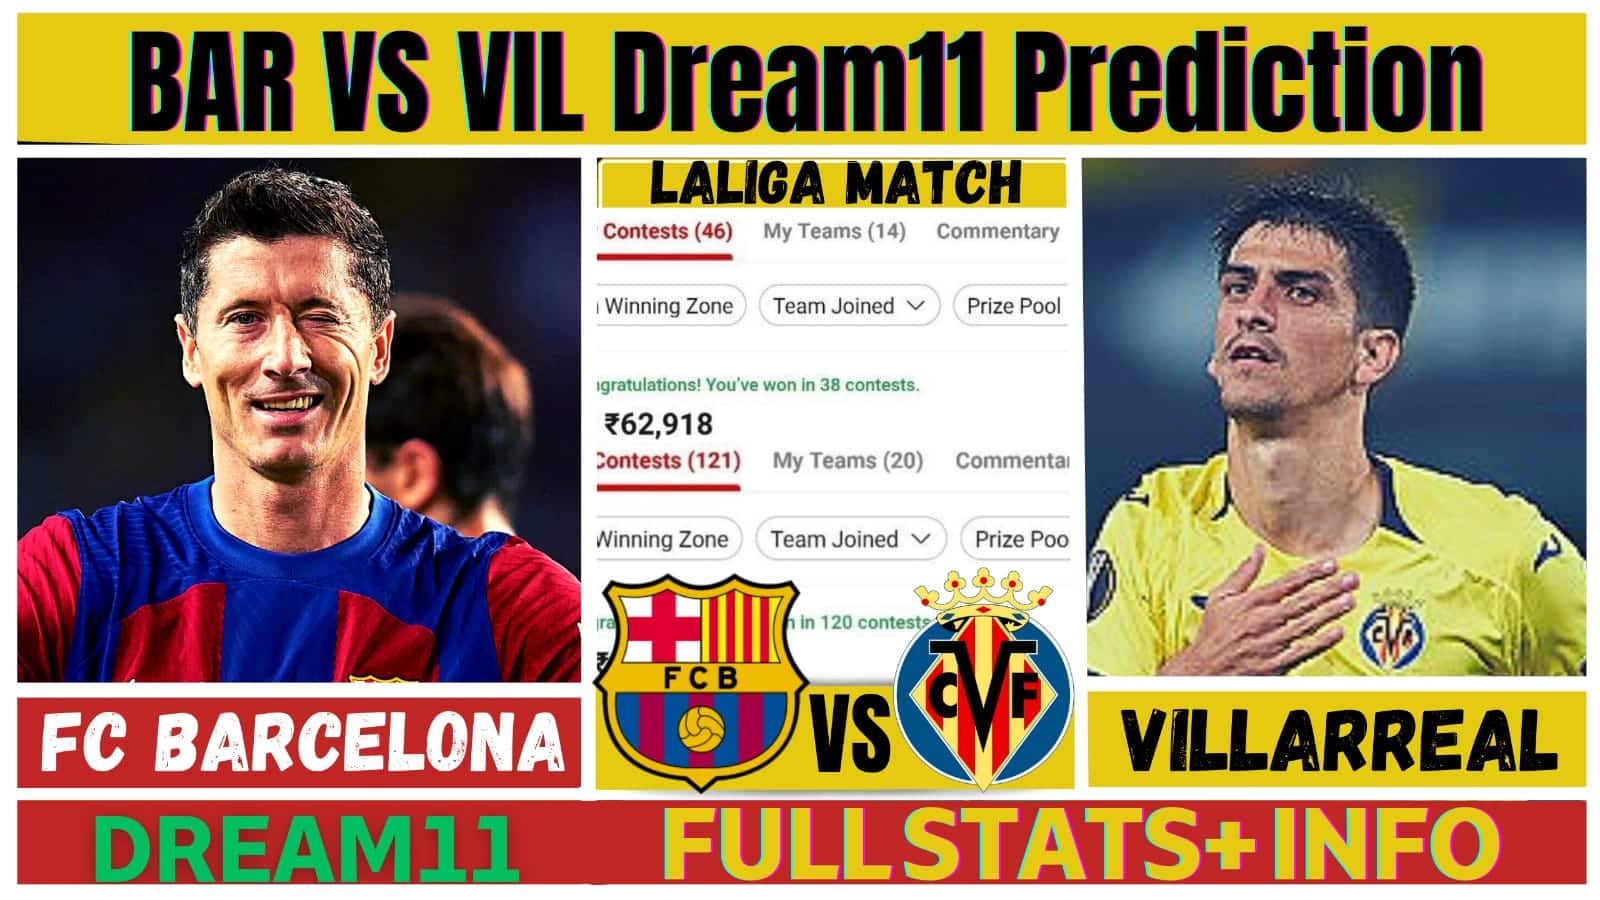 BAR VS VIL Dream11 Team prediction